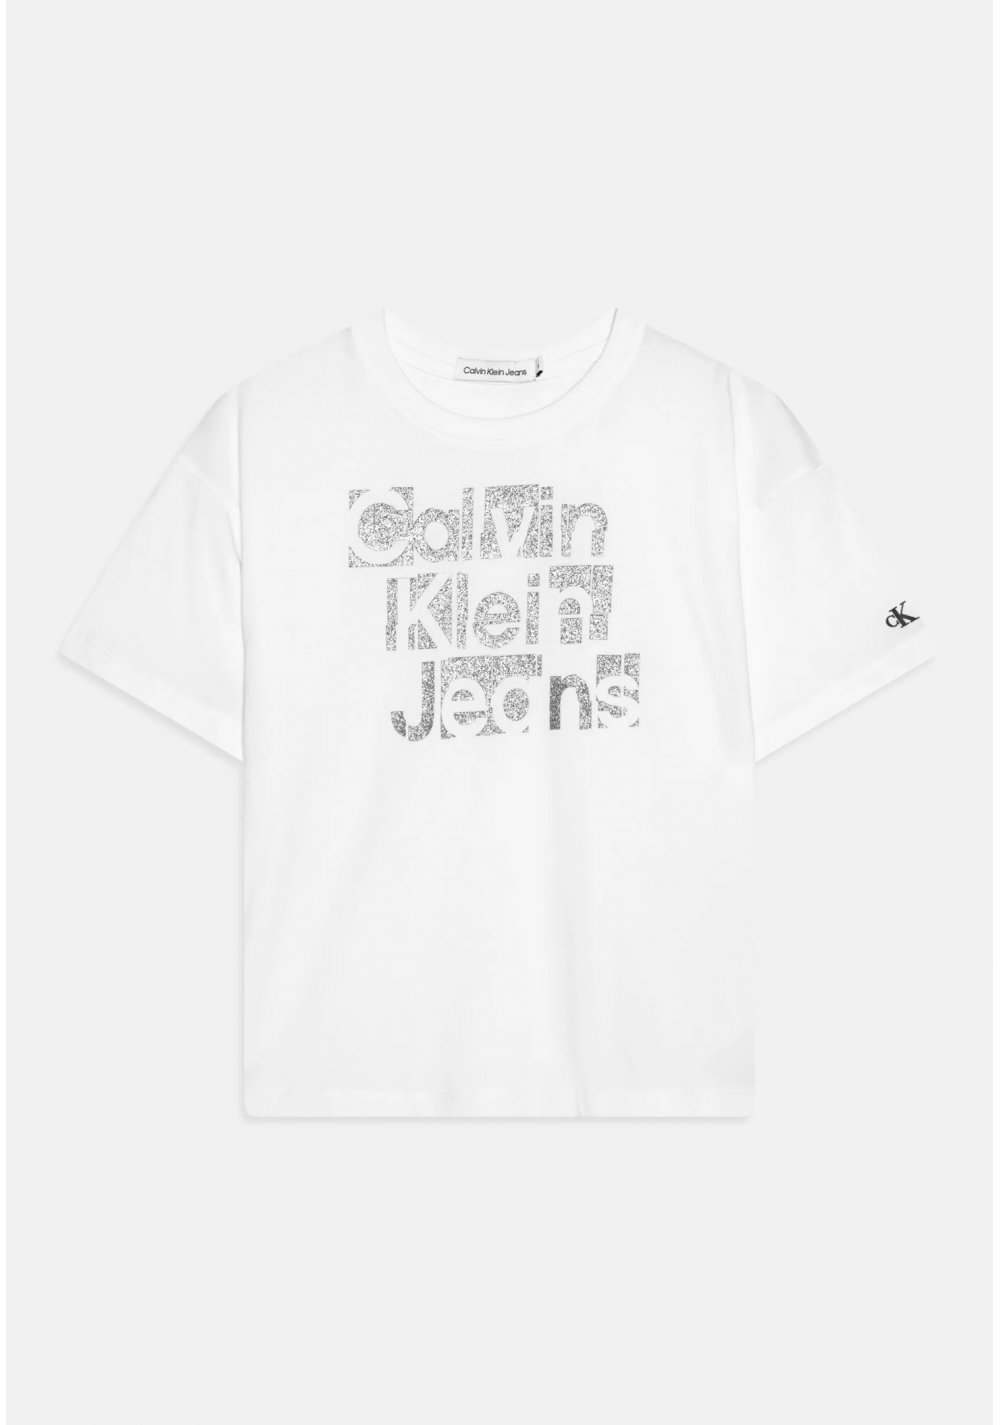 Calvin Klein Jeans bambina METALLIC BOXY - T-shirt bianca con stampa